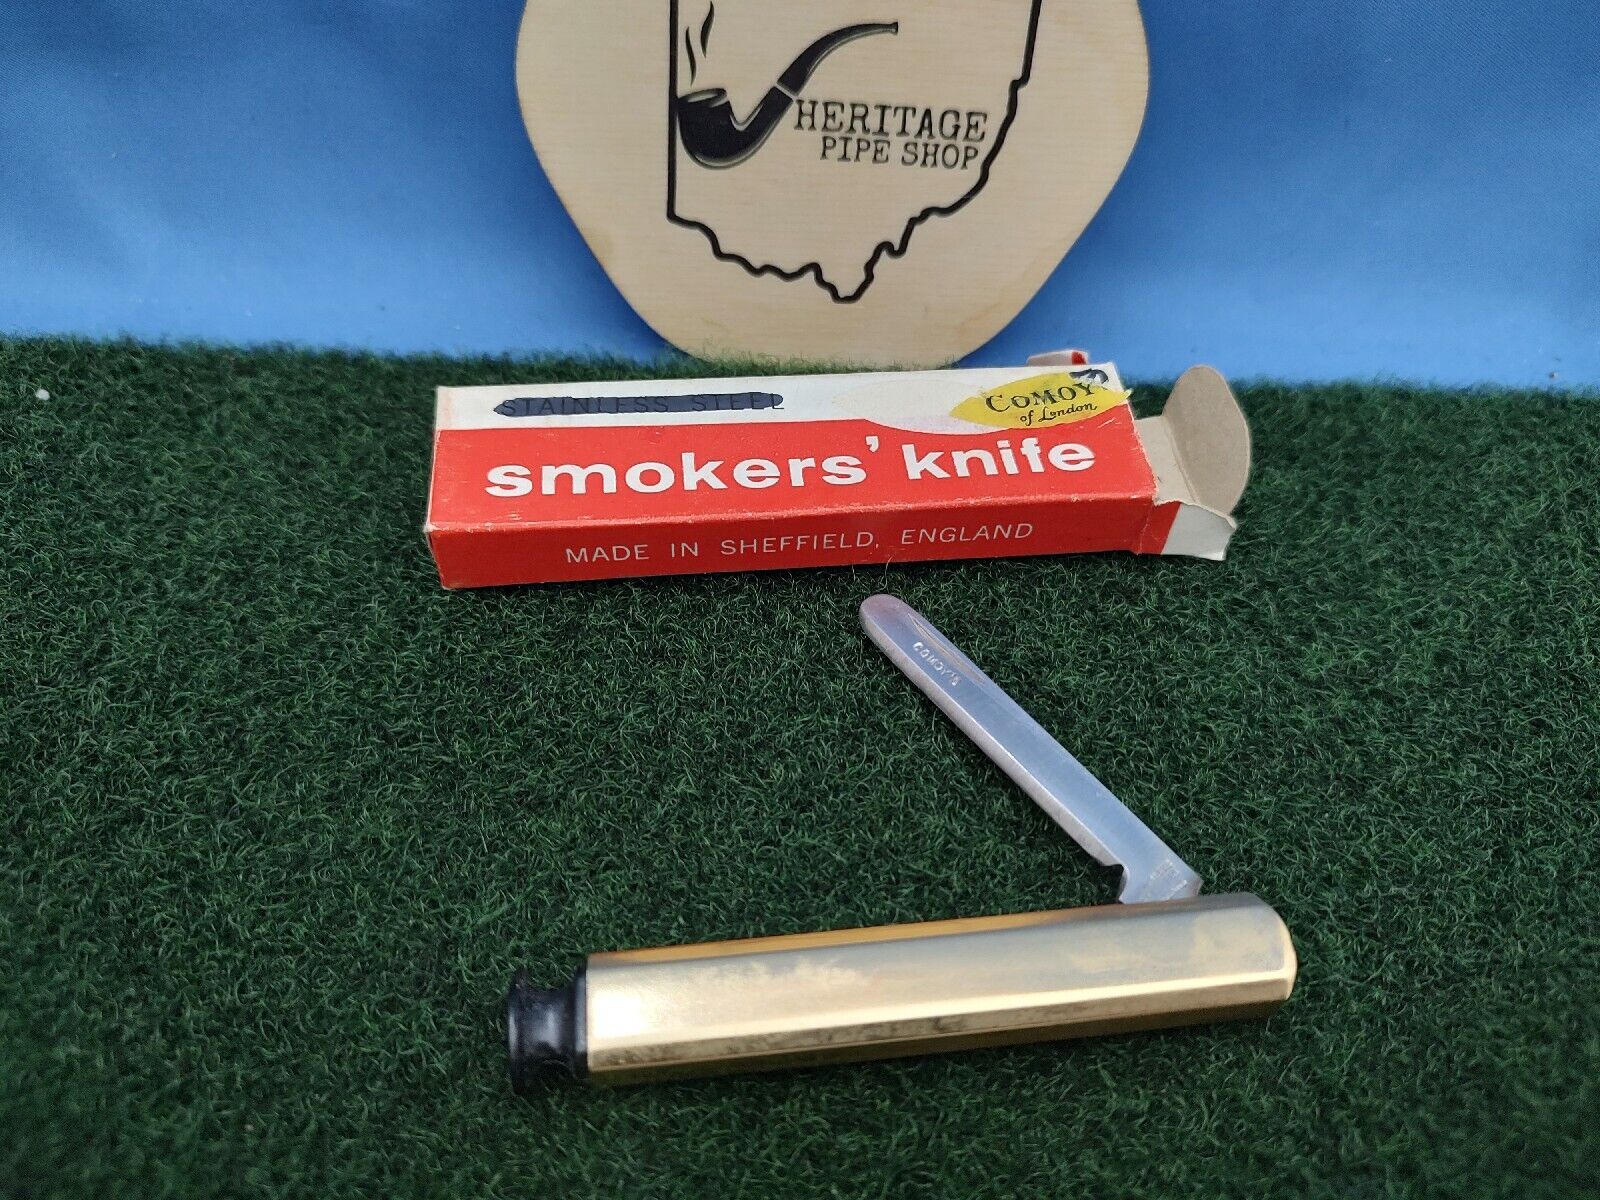 RARE BRAND NEW Vintage Comoy's England Made Smokers Knife in Original Box